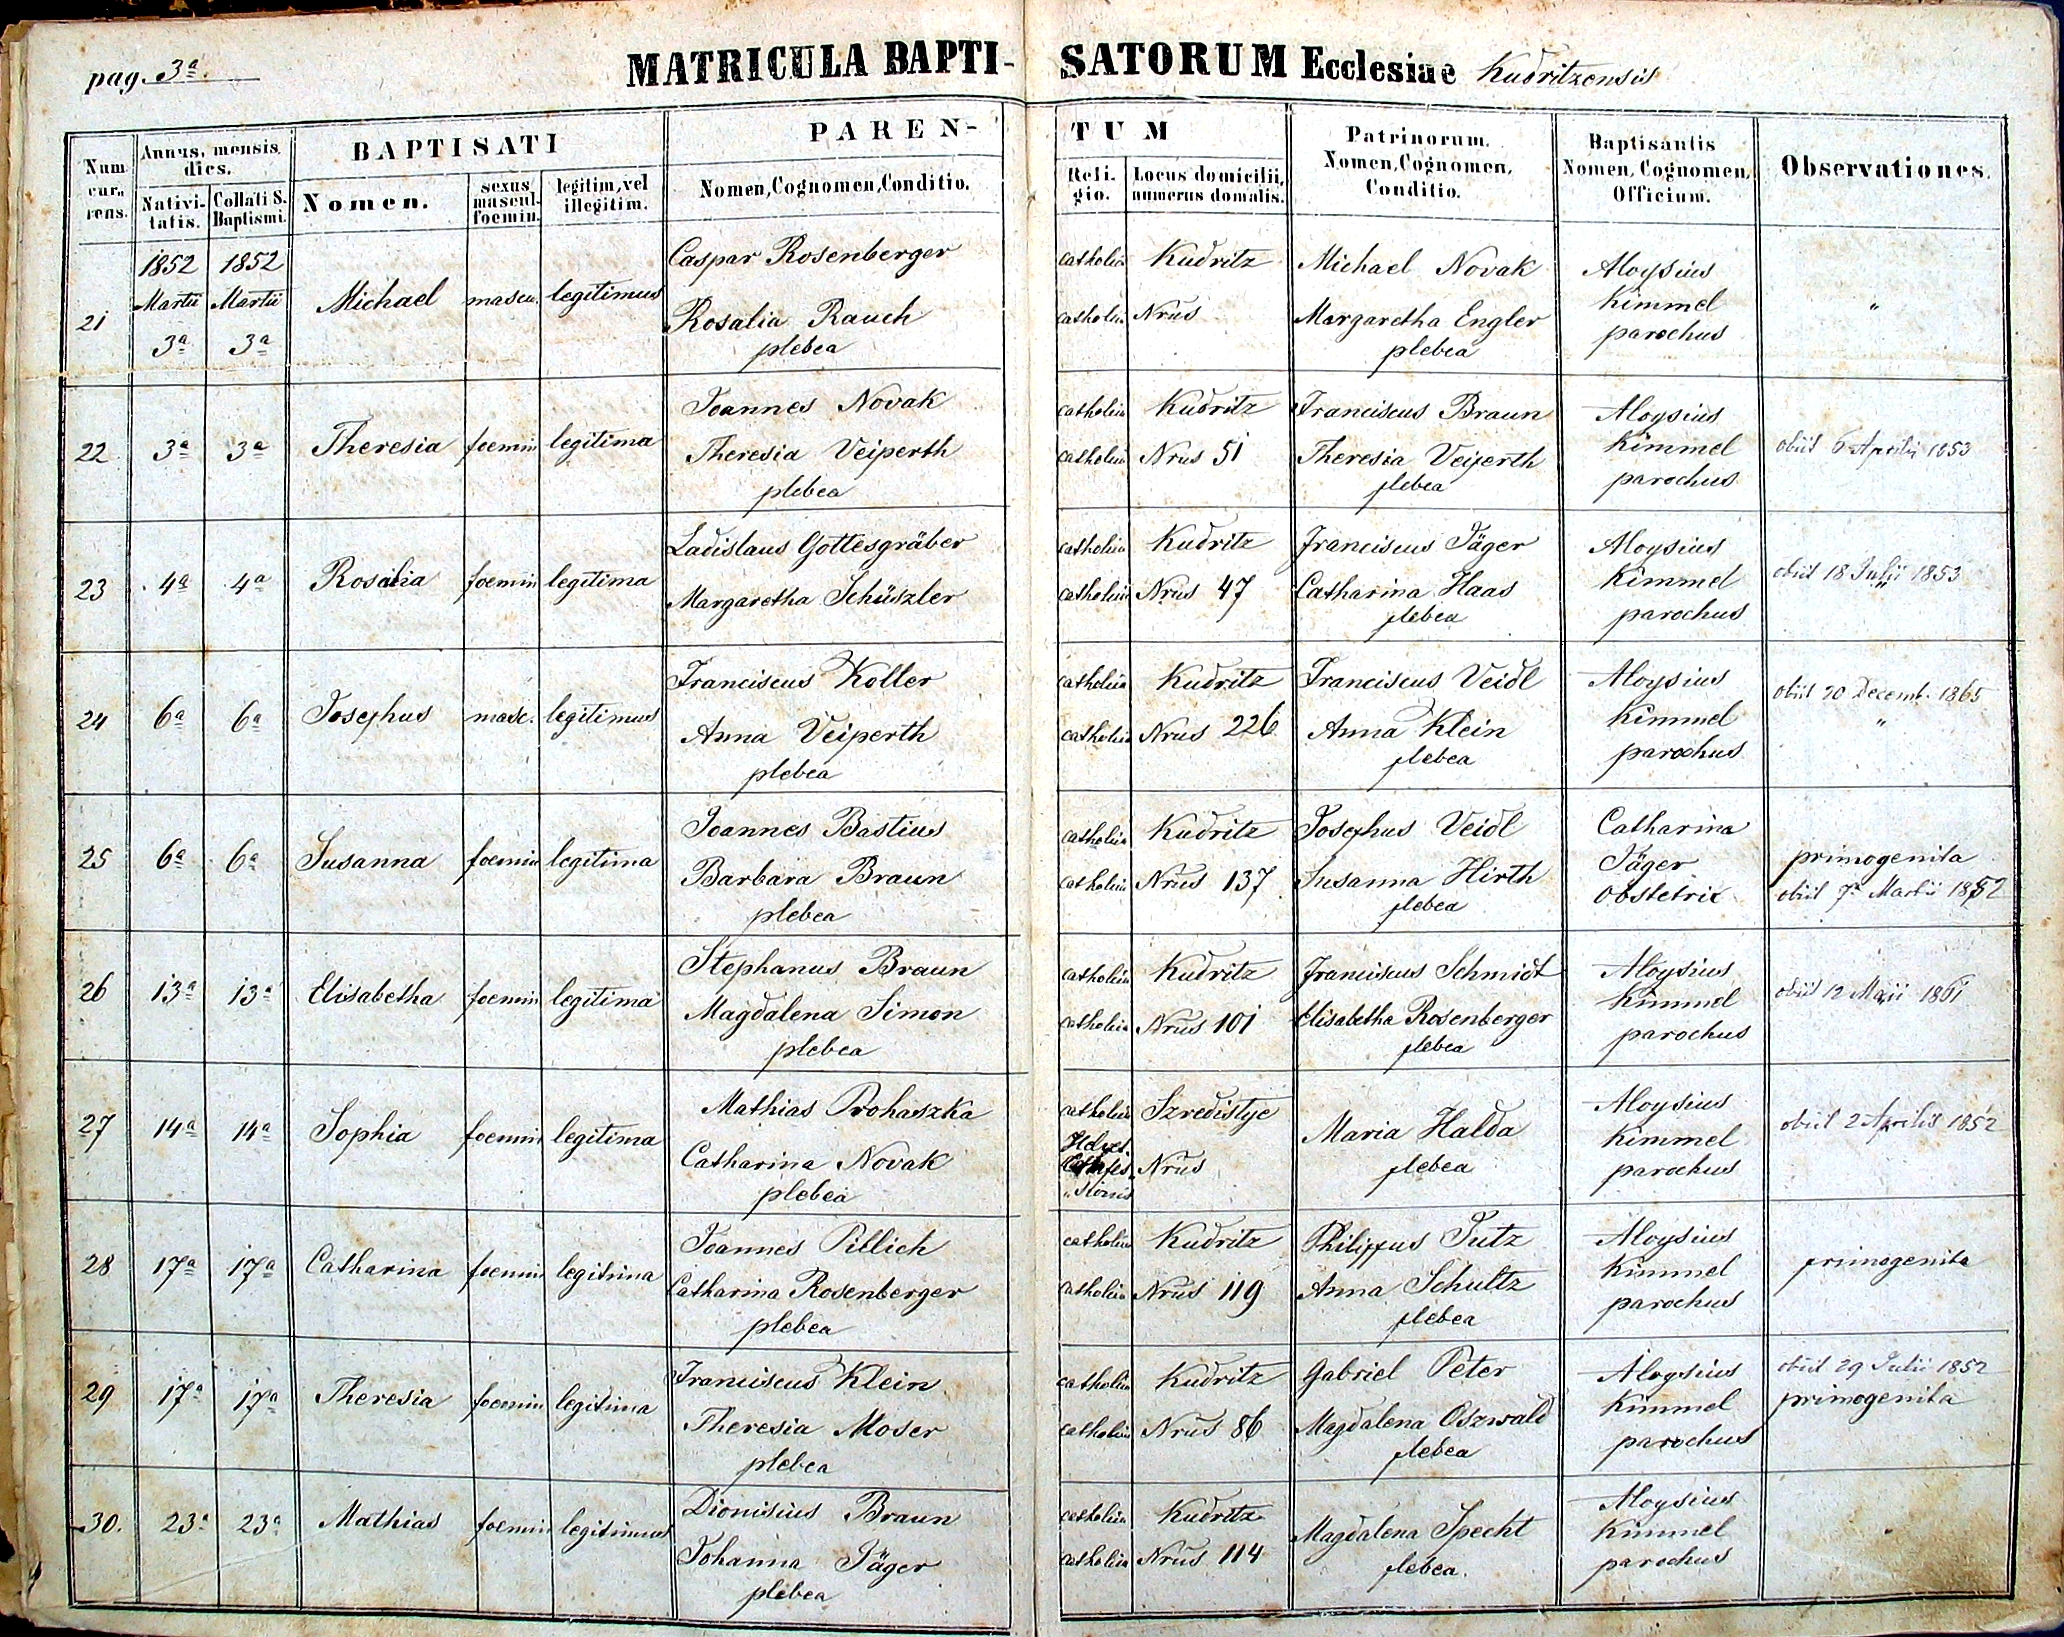 images/church_records/BIRTHS/1852-1870B/003